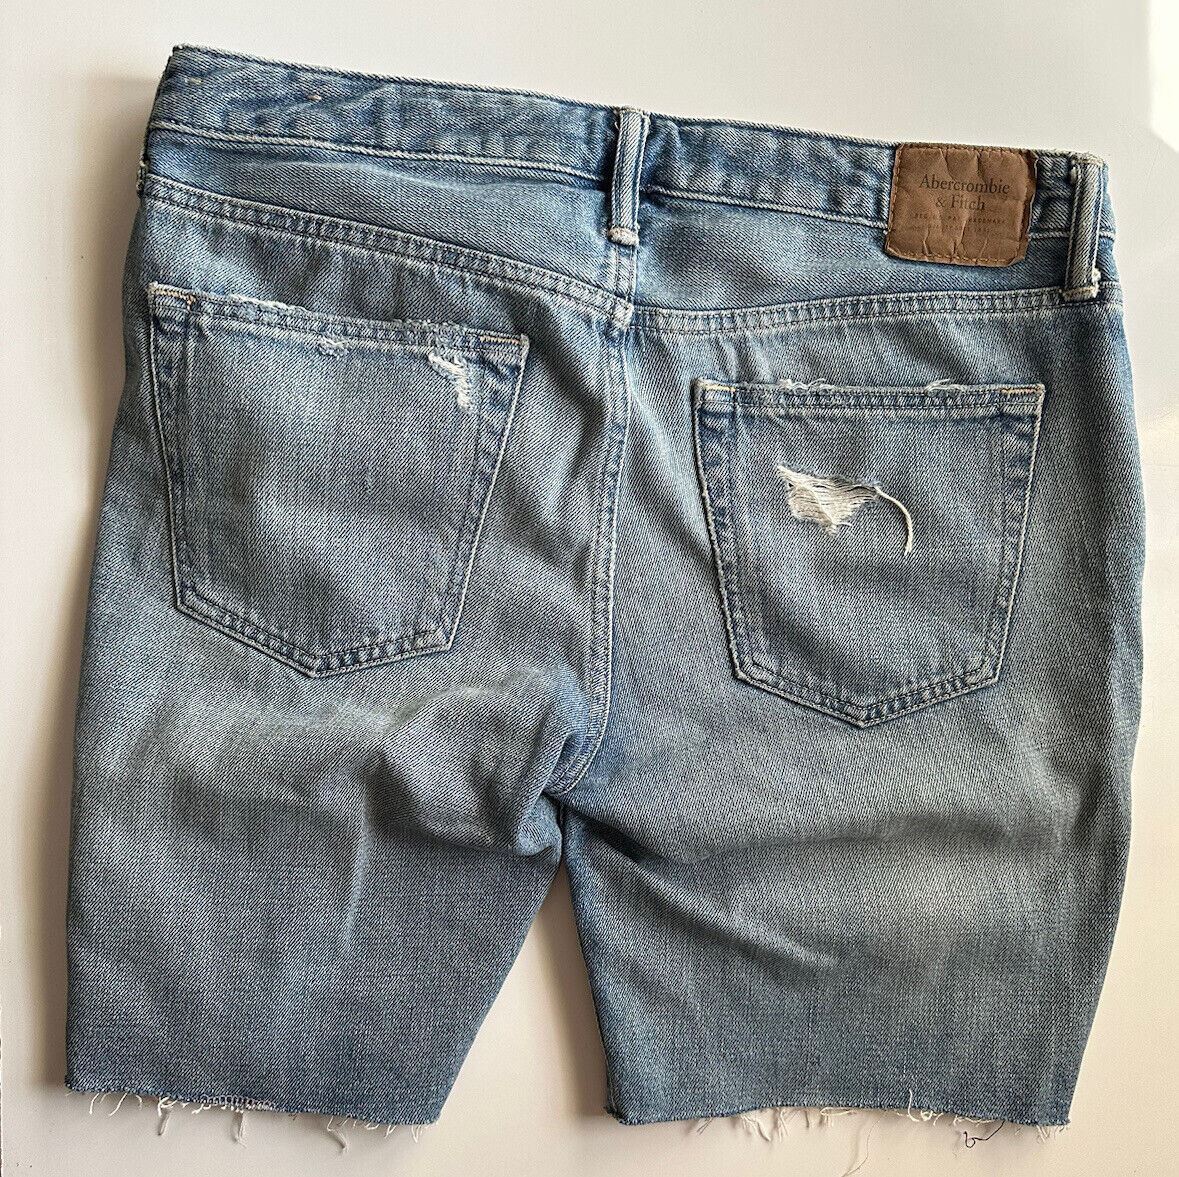 Abercrombie & Fitch Men's Modern Blue Jeans Shorts 32